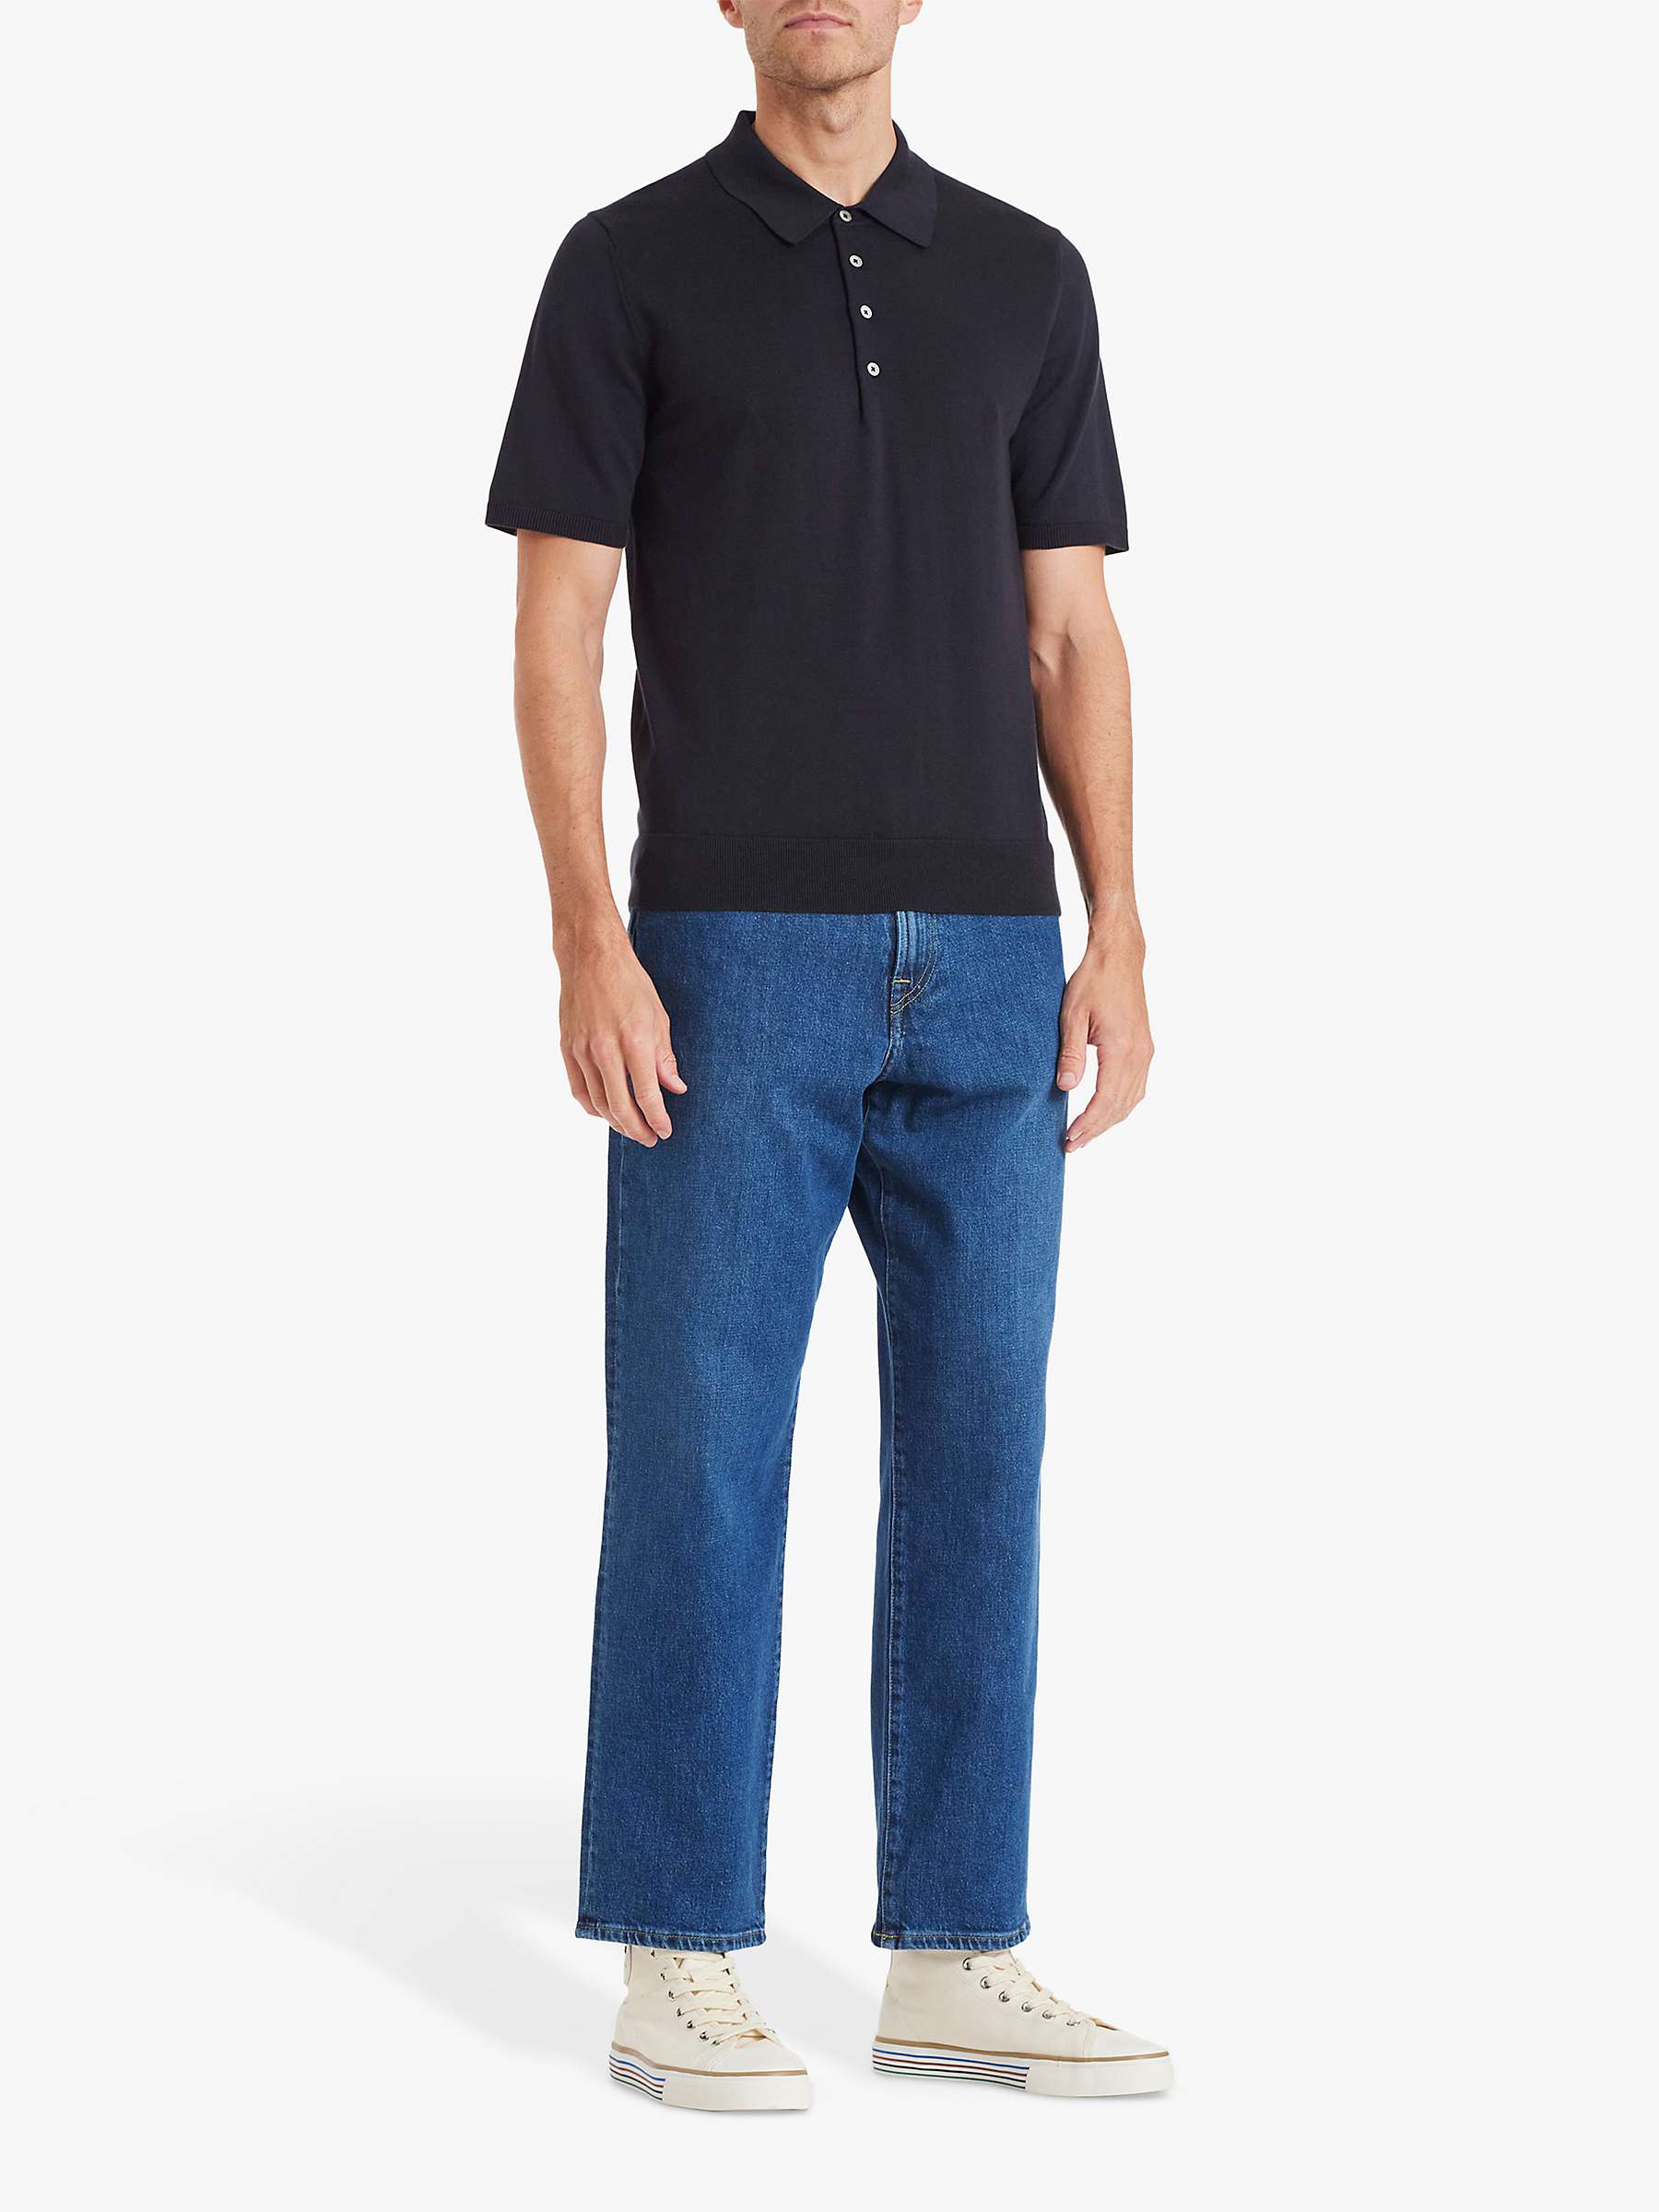 Buy Paul Smith Organic Cotton Short Sleeve Polo Shirt, Black Online at johnlewis.com